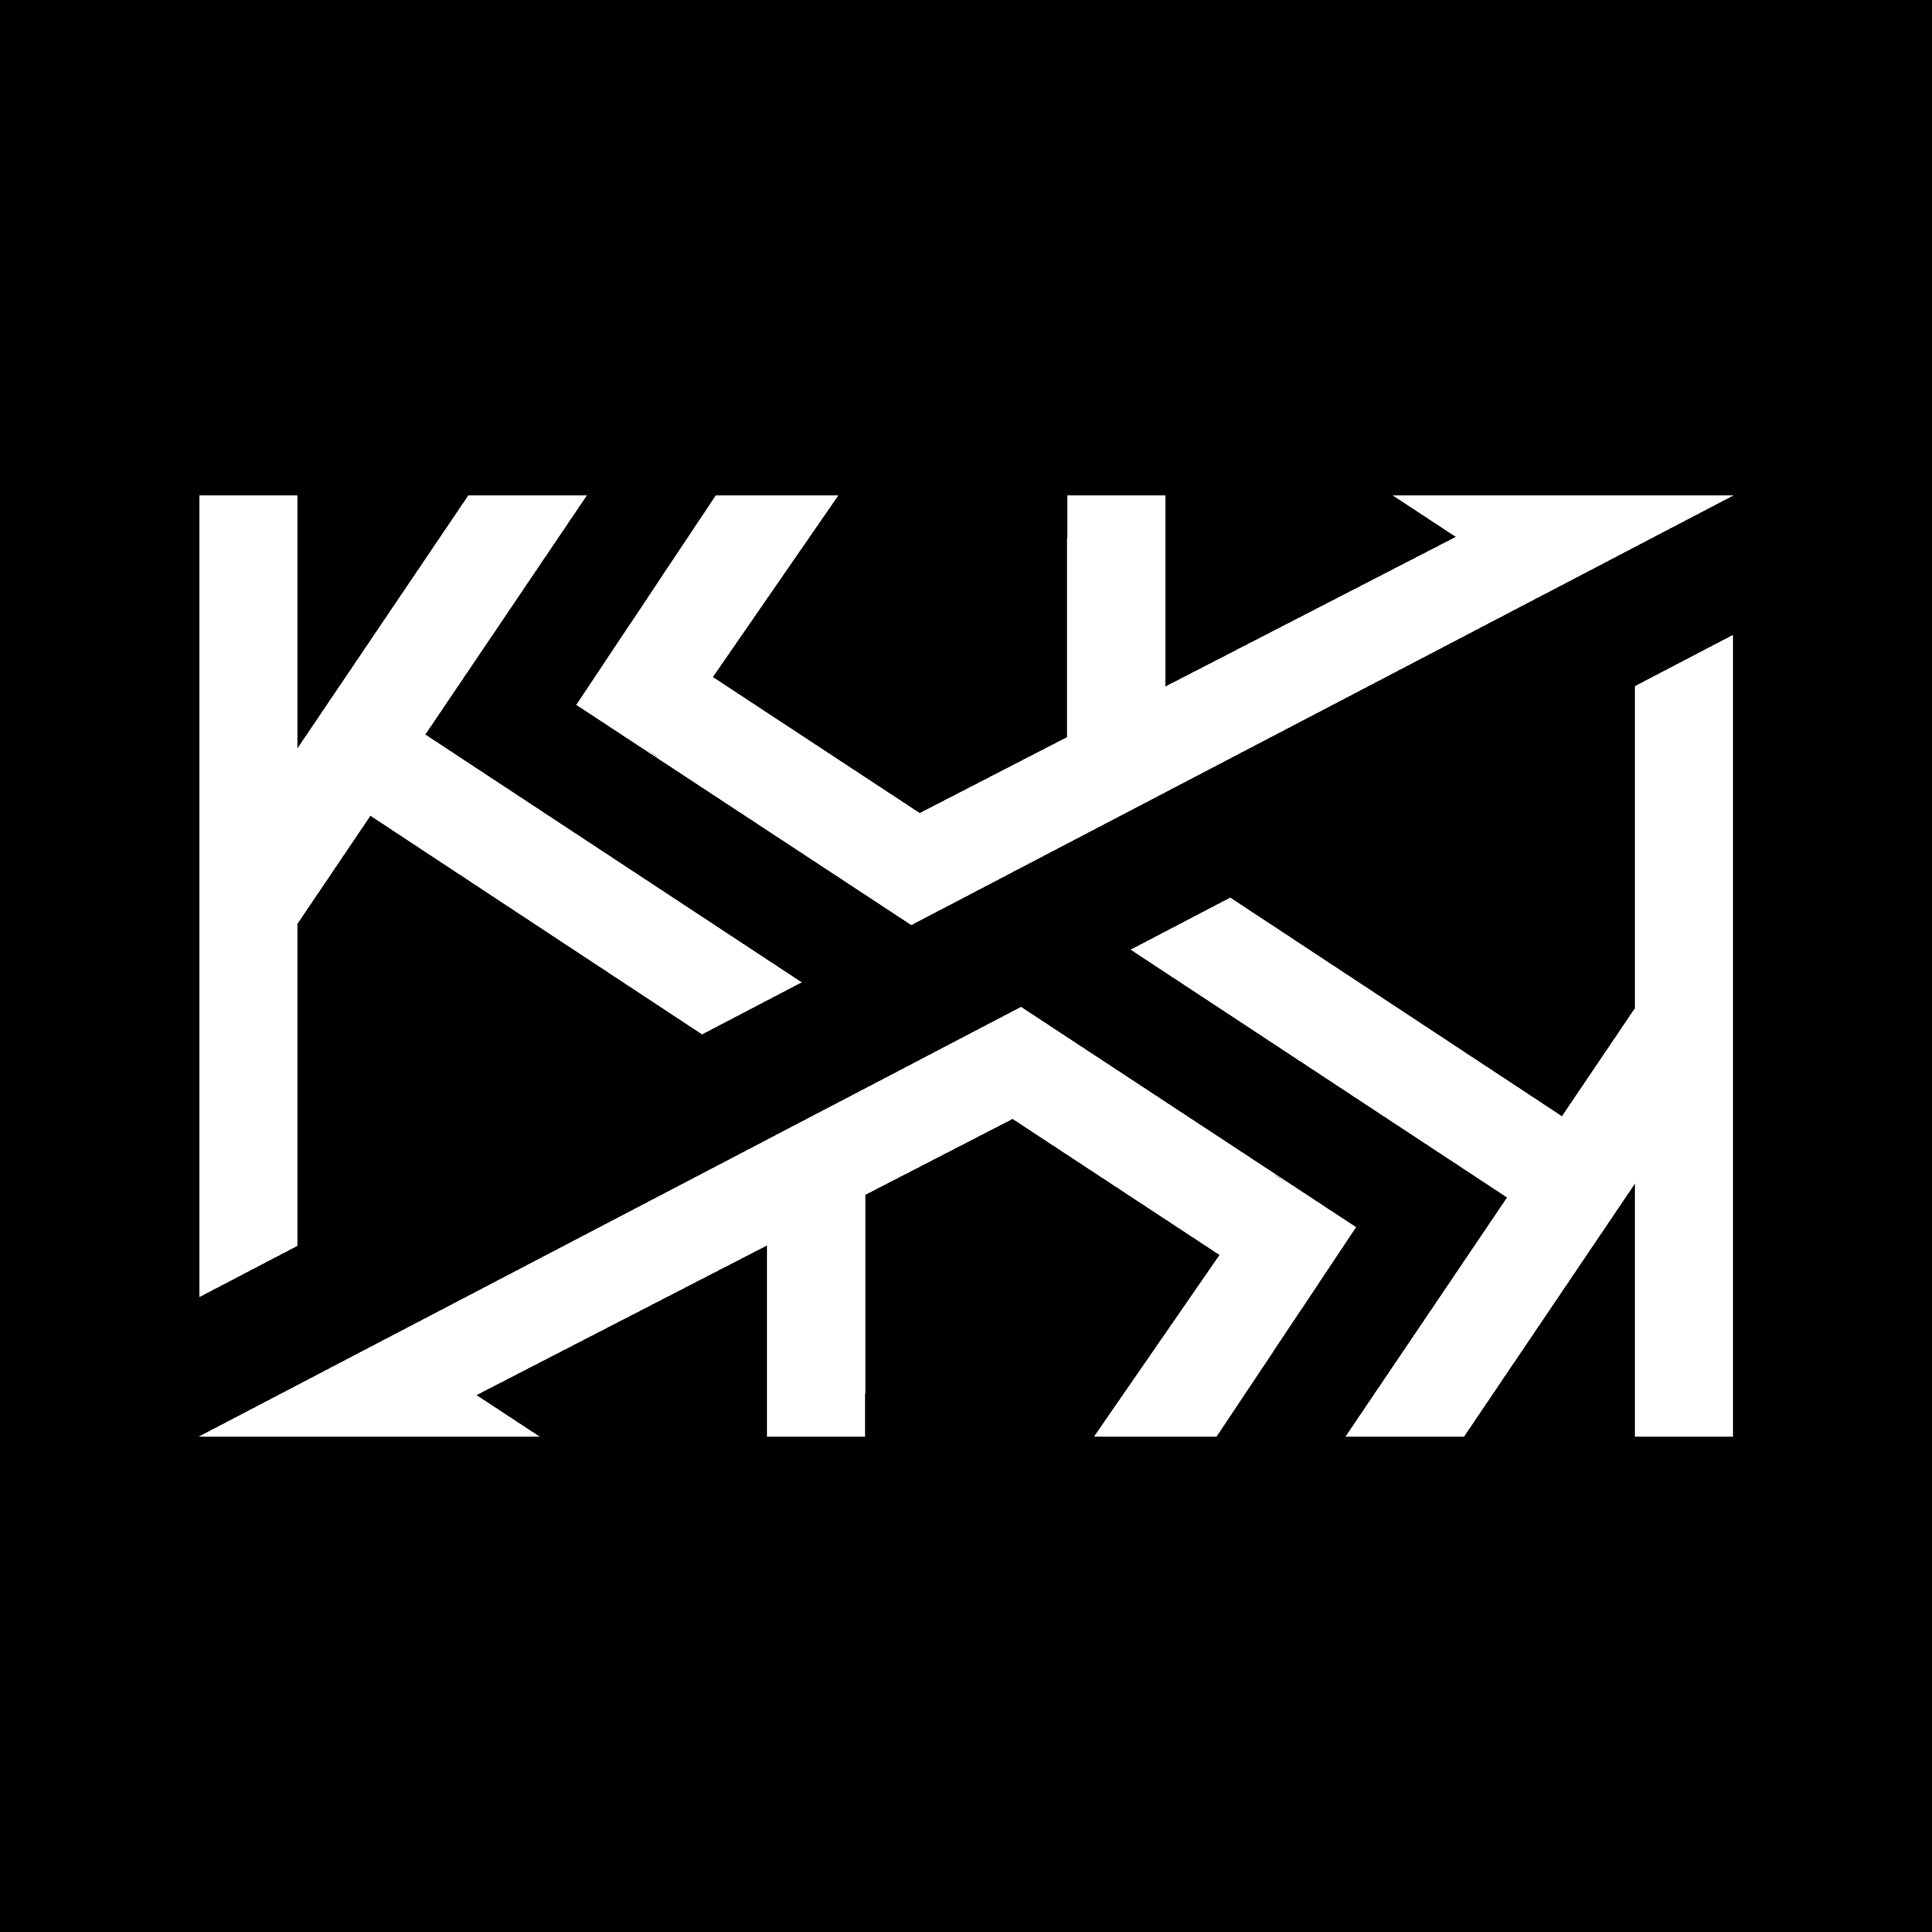 Kanye West Logo - i made a Kanye logo design, tell me your thoughts.. « Kanye West Forum